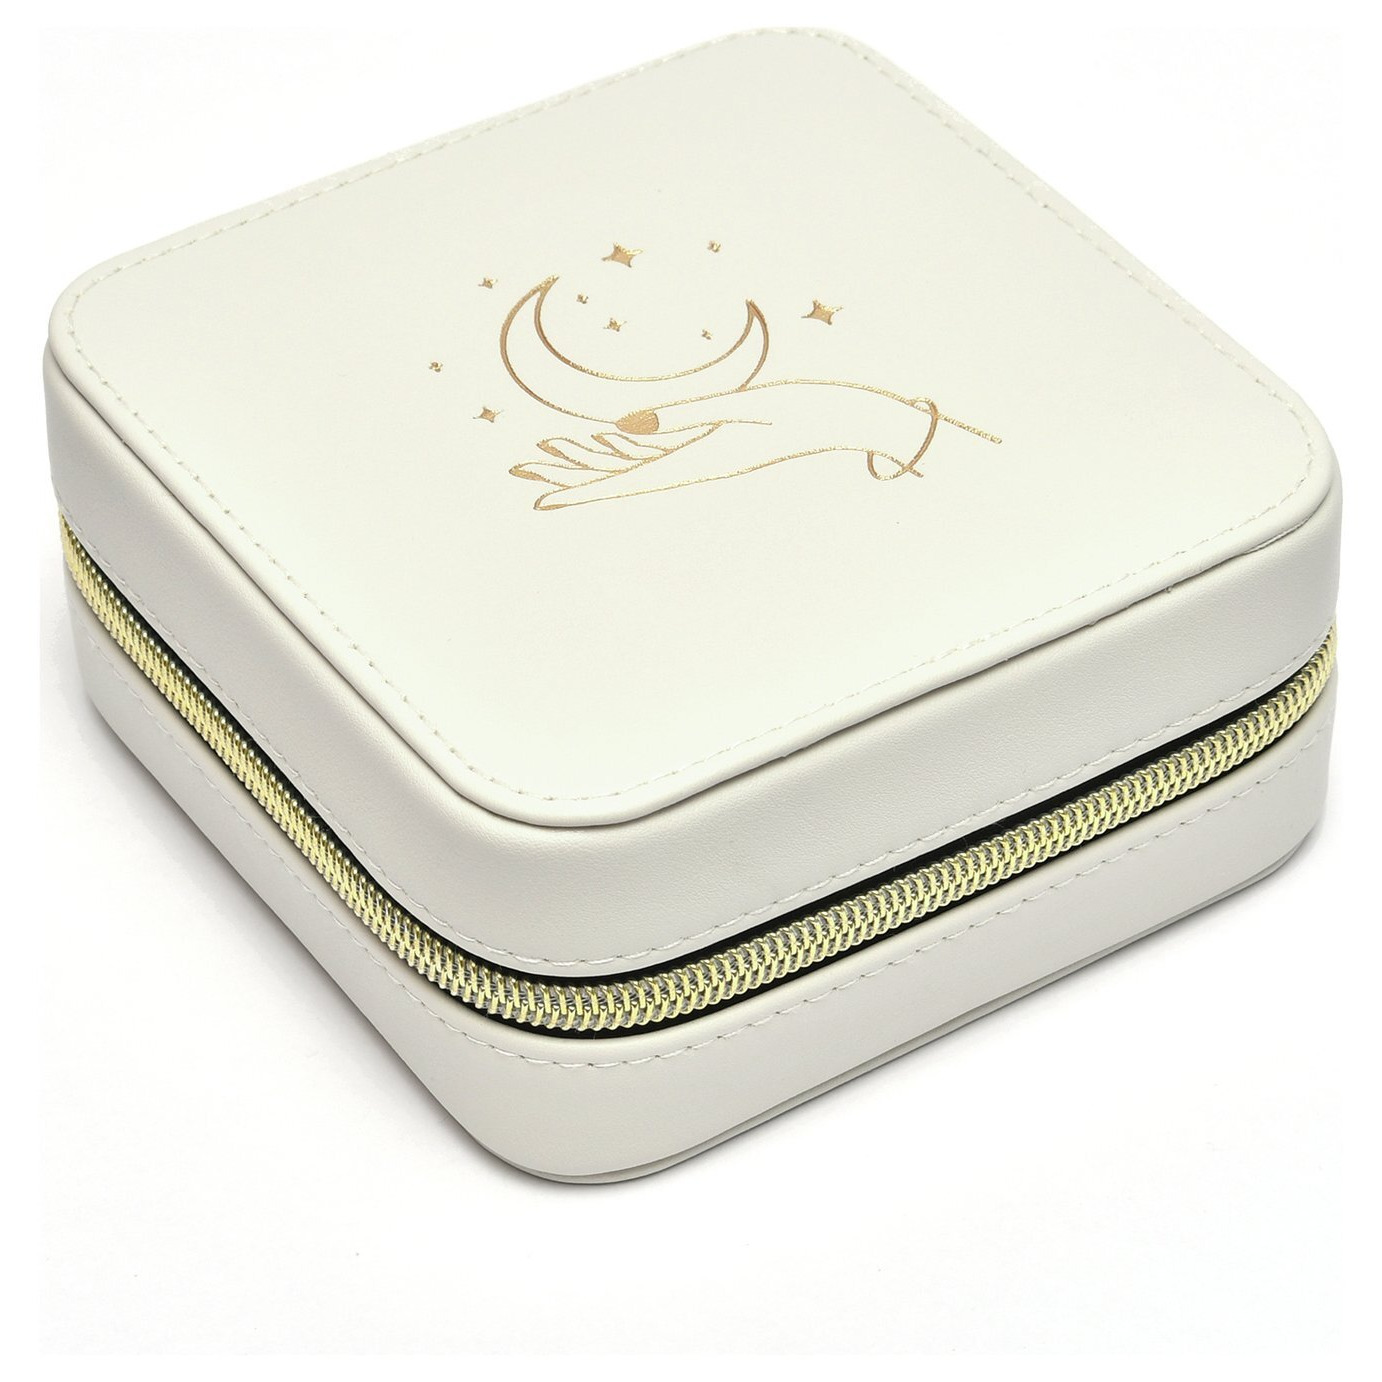 Personalised Luxury Jewellery Box Gift By Dibor | notonthehighstreet.com